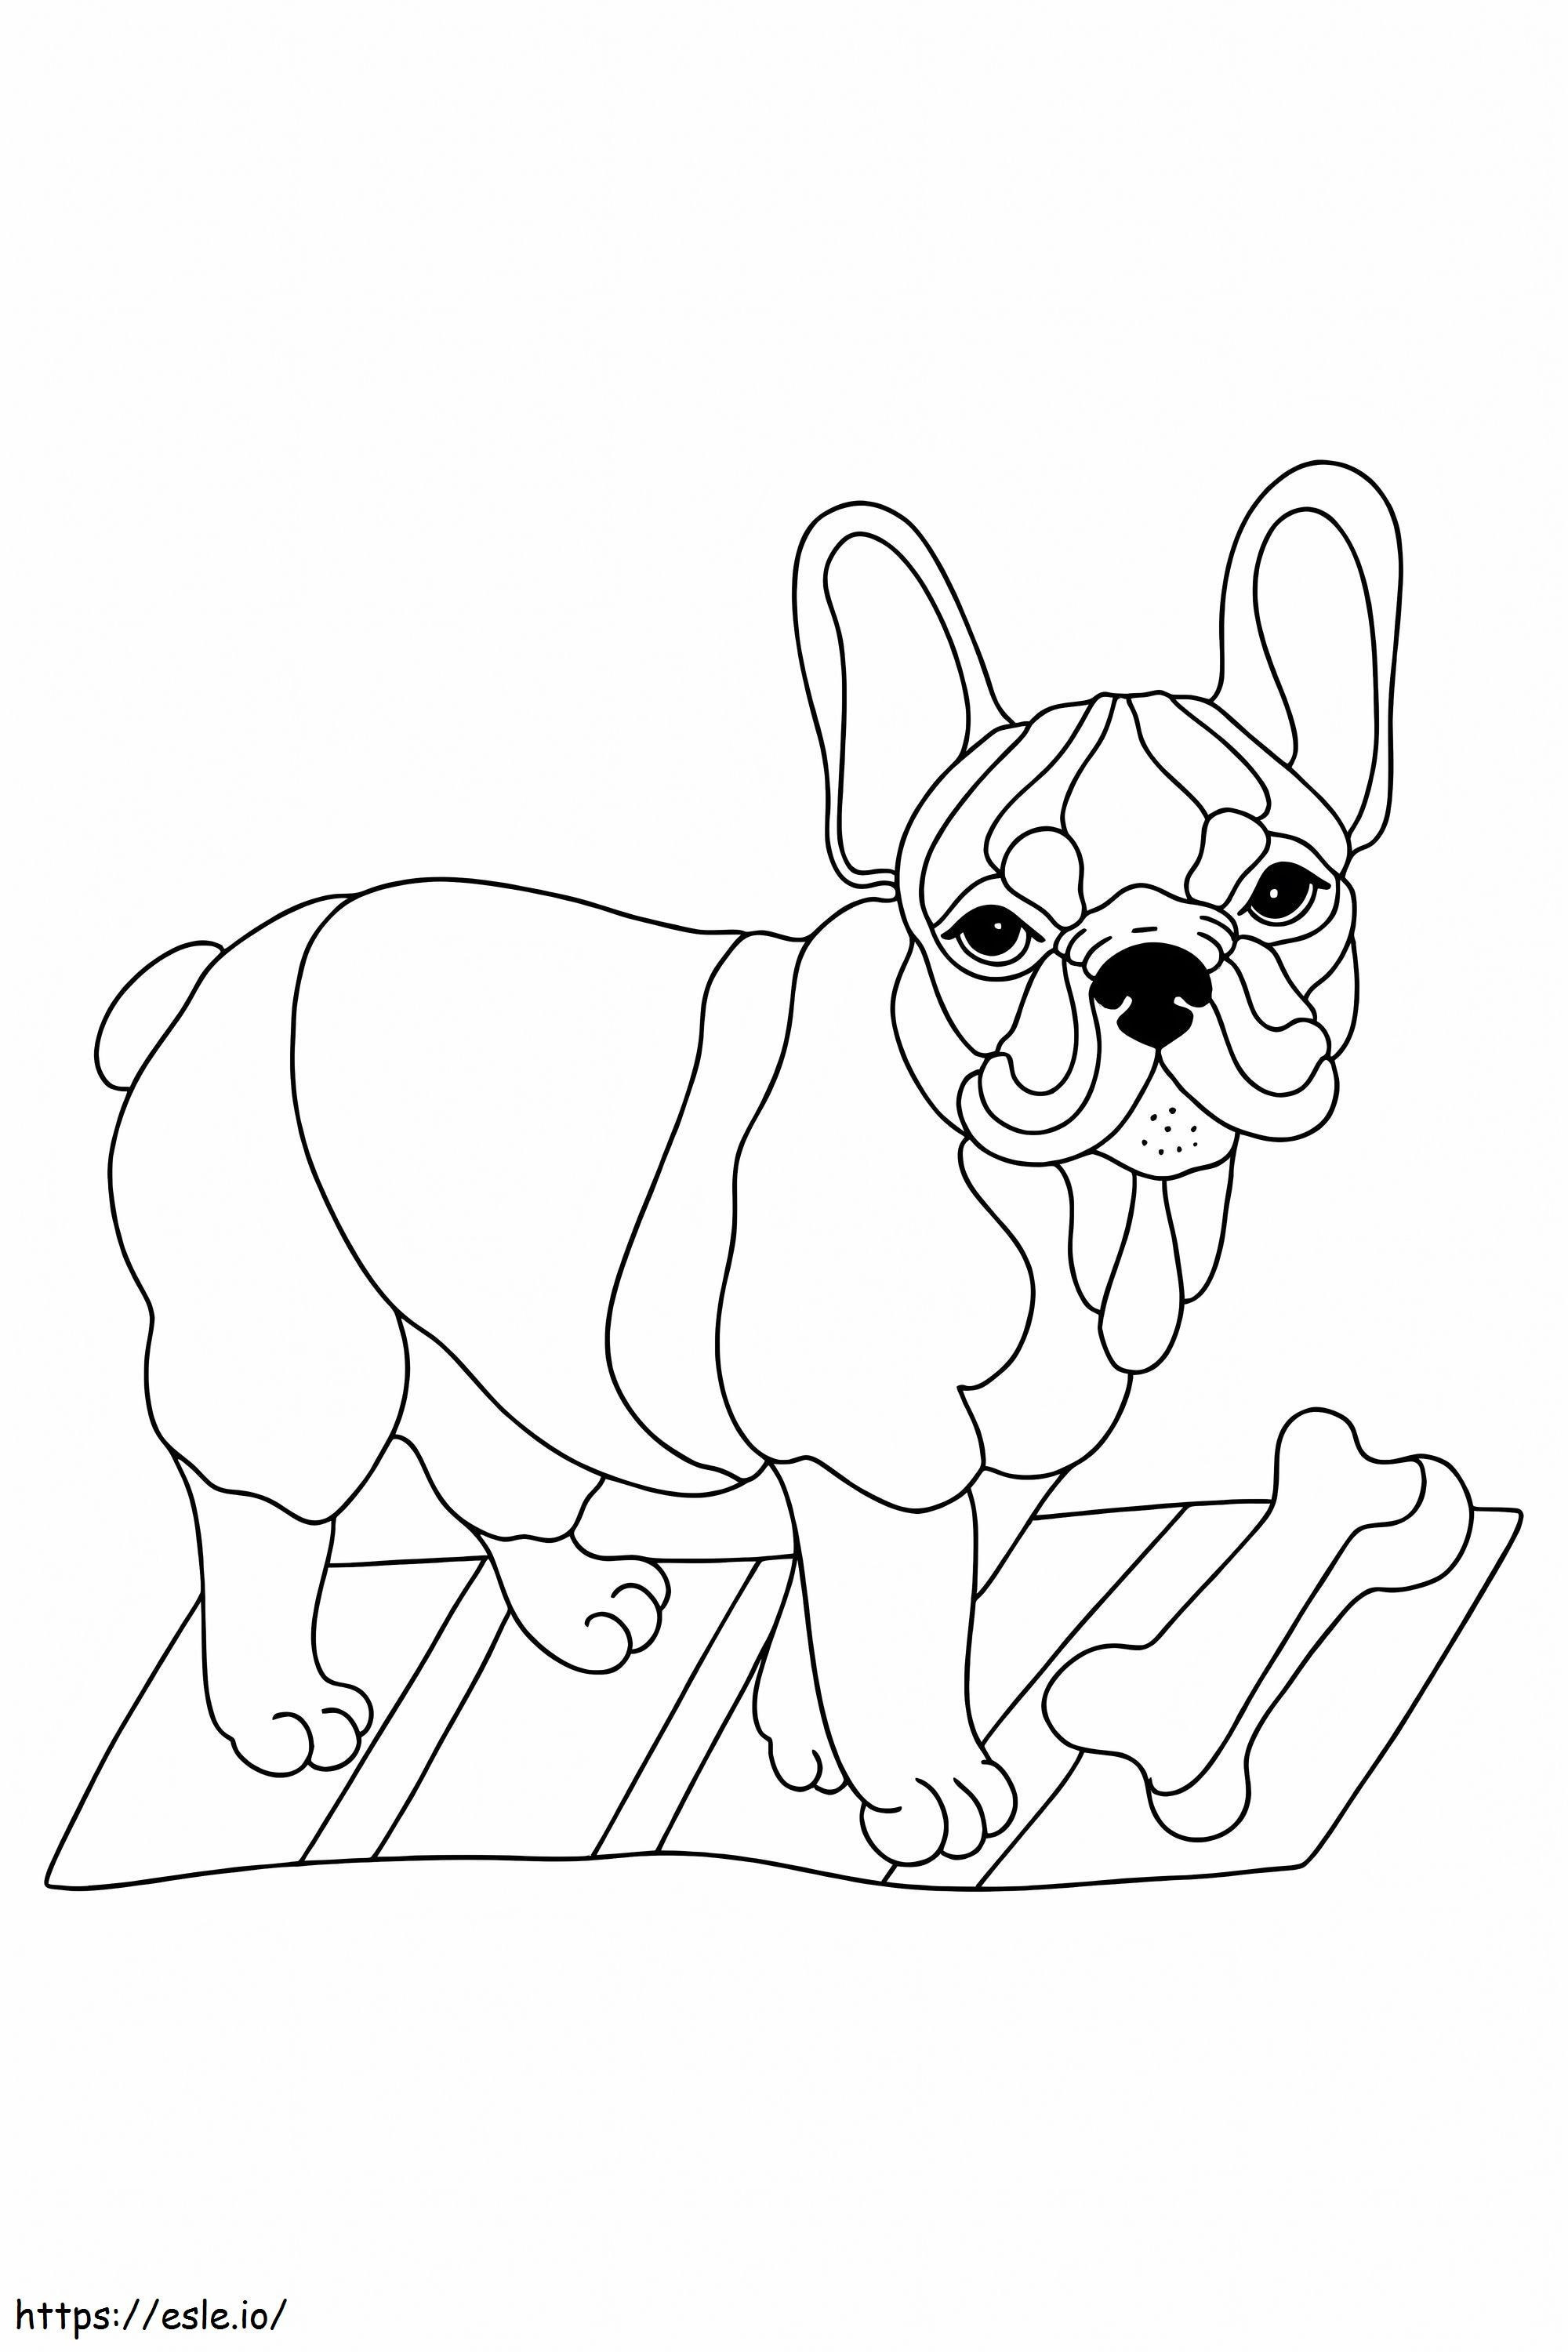 Bulldog With Bone coloring page